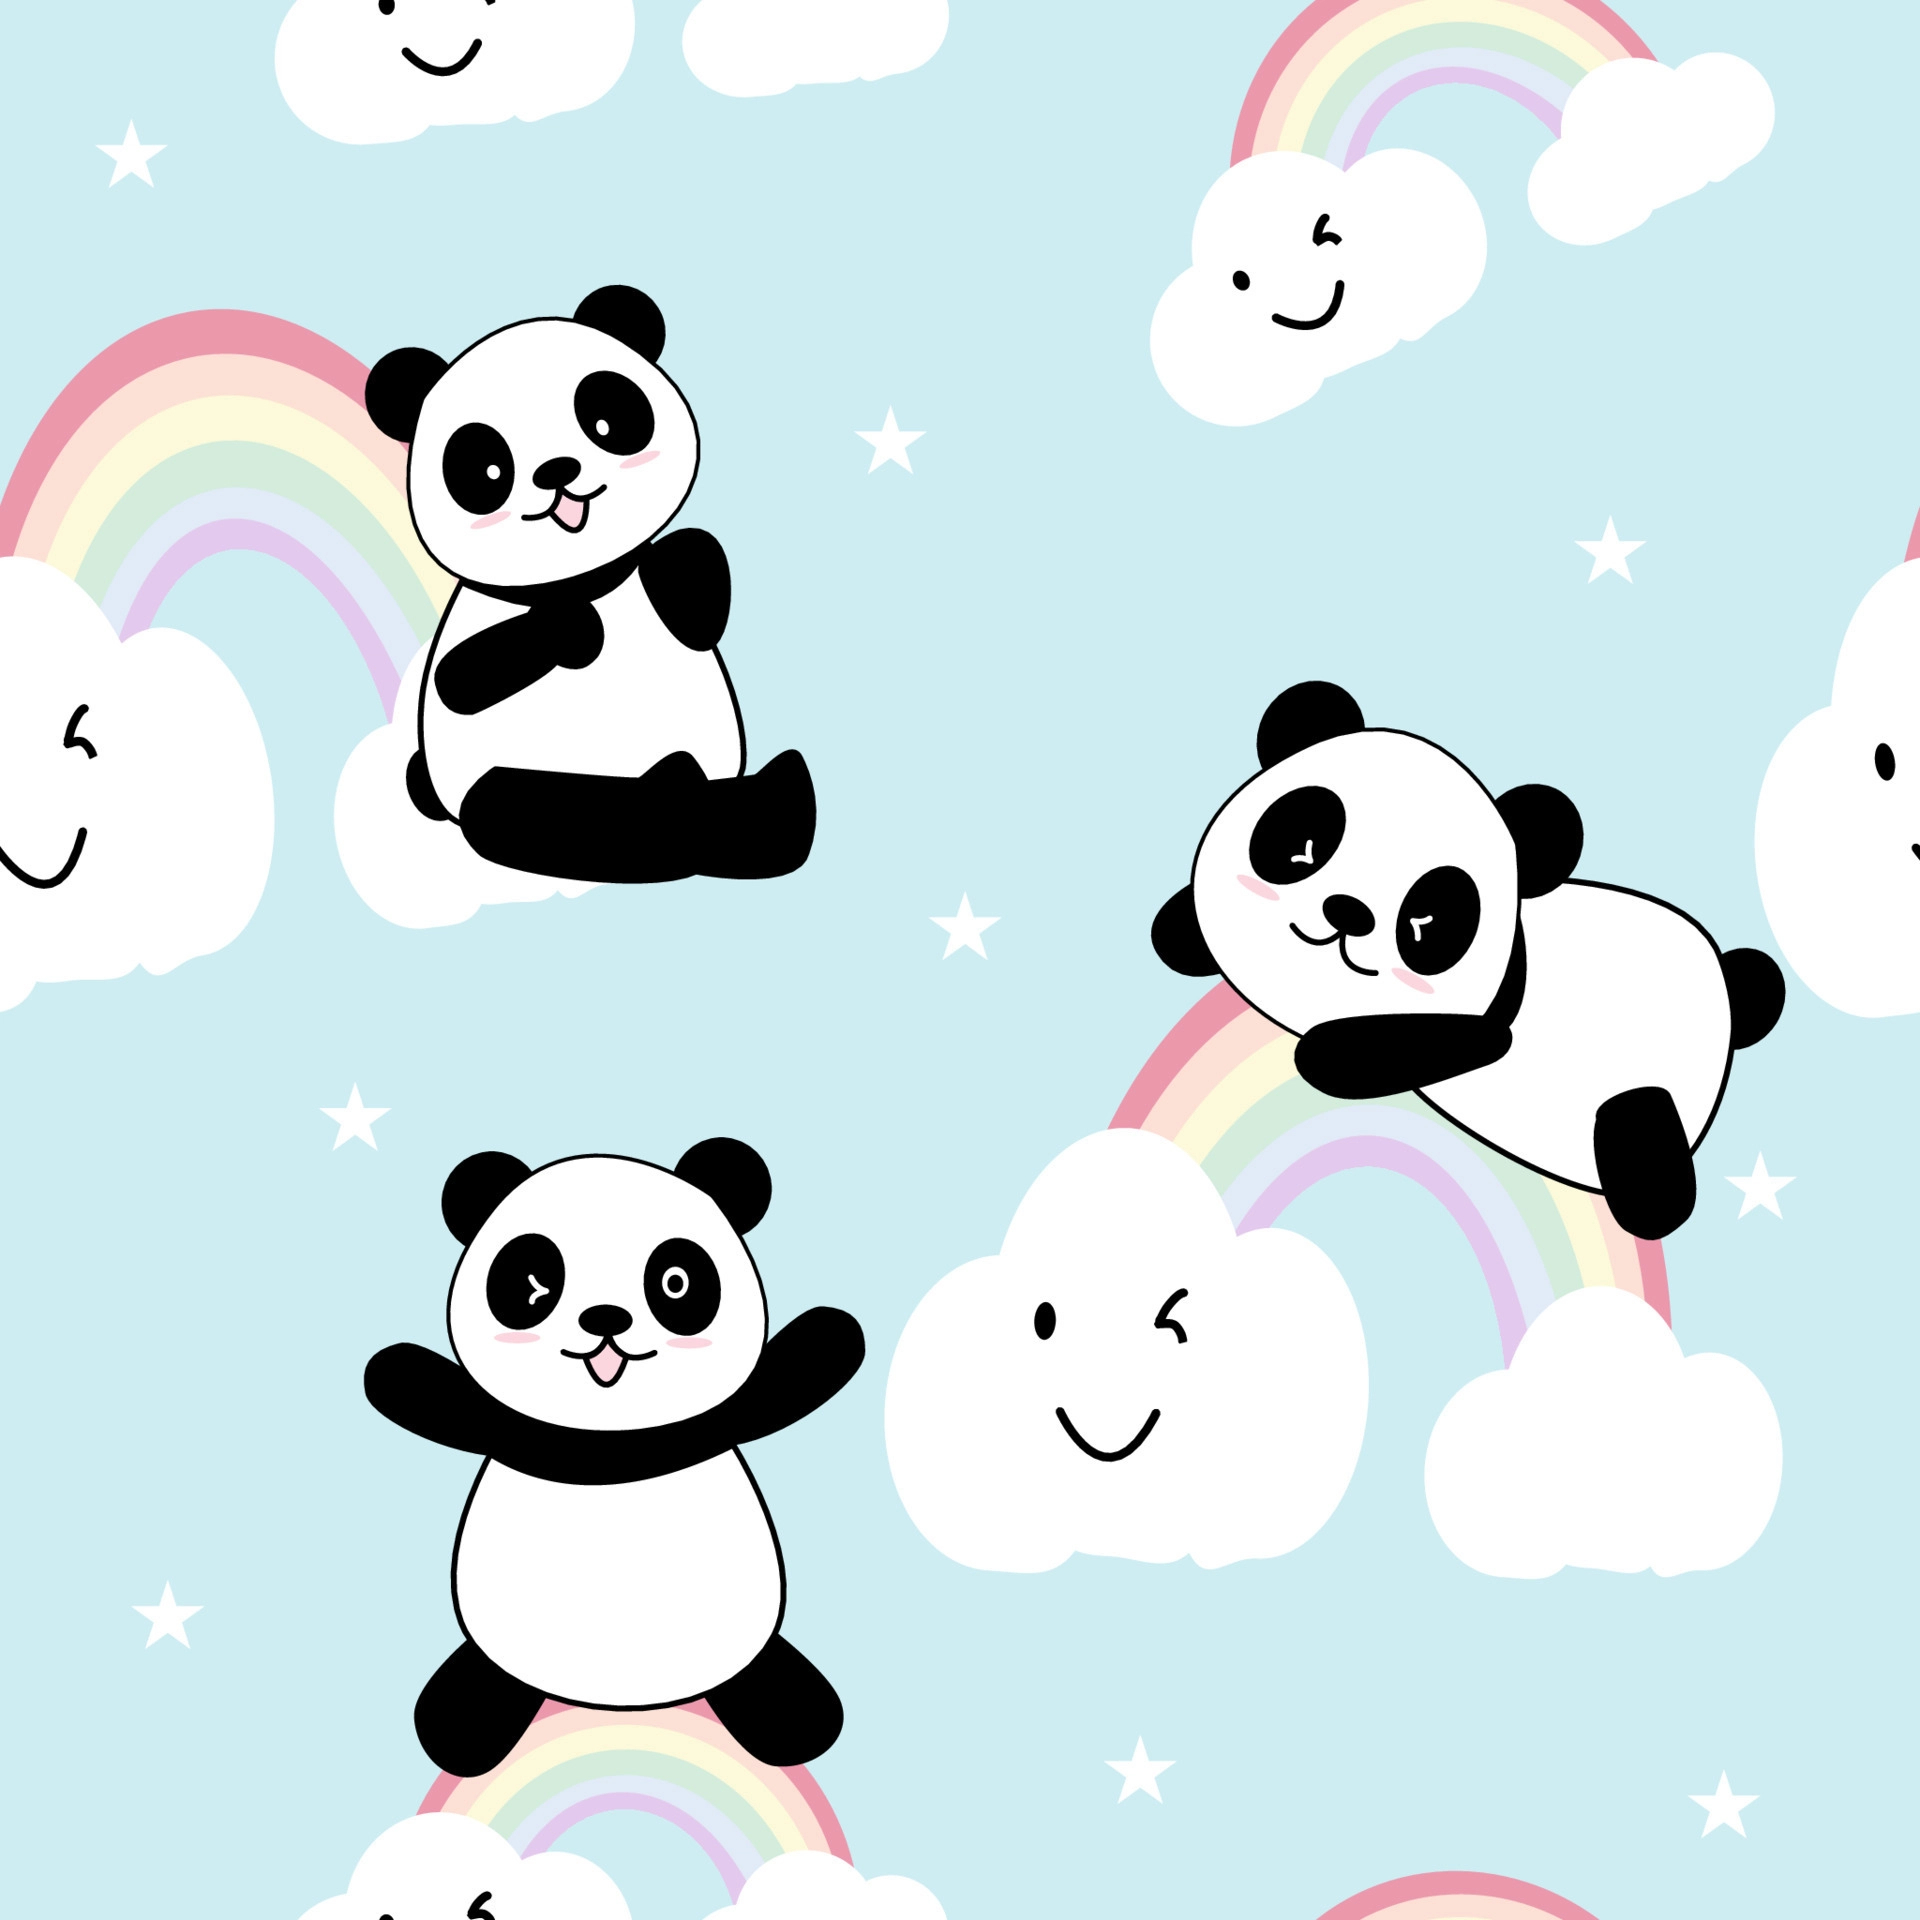 1920x1920 Cute Panda Seamless Pattern Background, Cartoon Panda Bears Vector illustration, Creative kids for fabric, wrapping, textile, wallpaper, apparel. 7888296 Vector Art